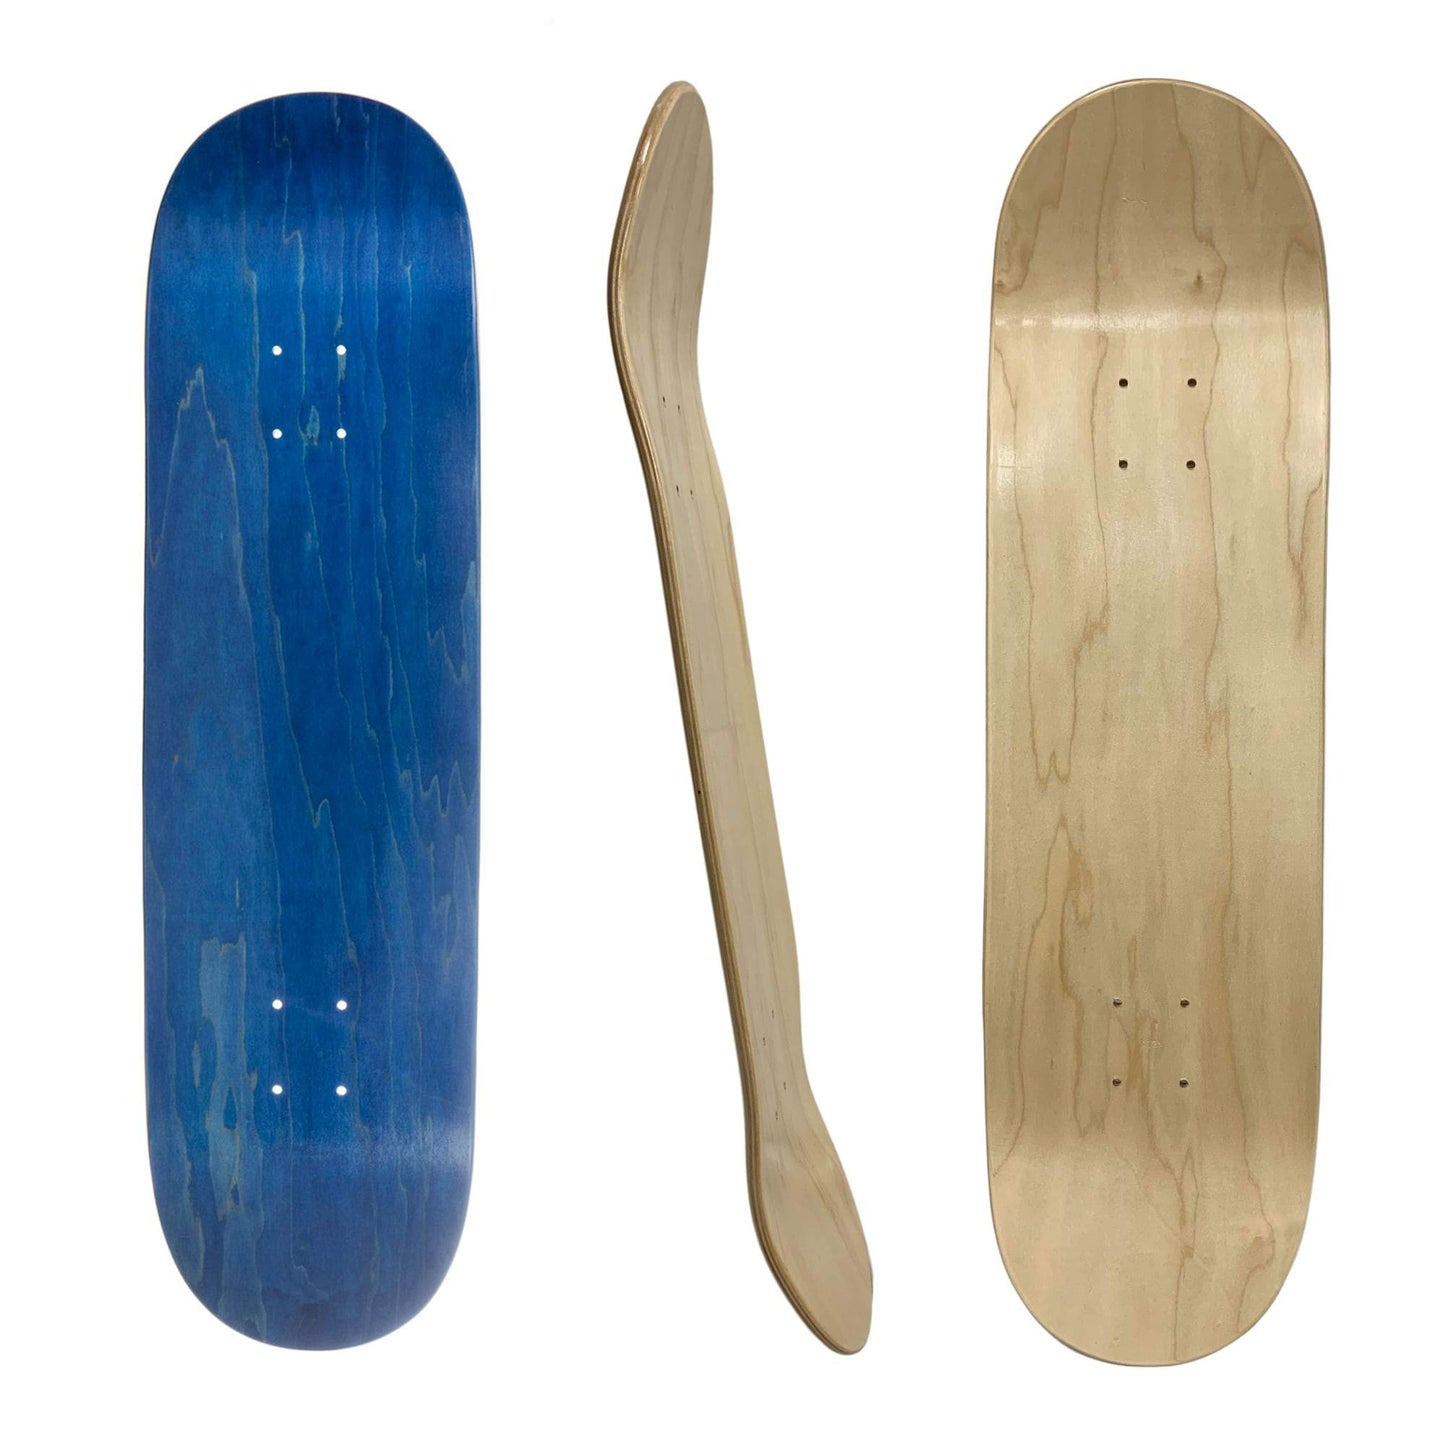 No Comply Skate Shop Wood Light Shape Wood Light - Fiber Glass Basic Green